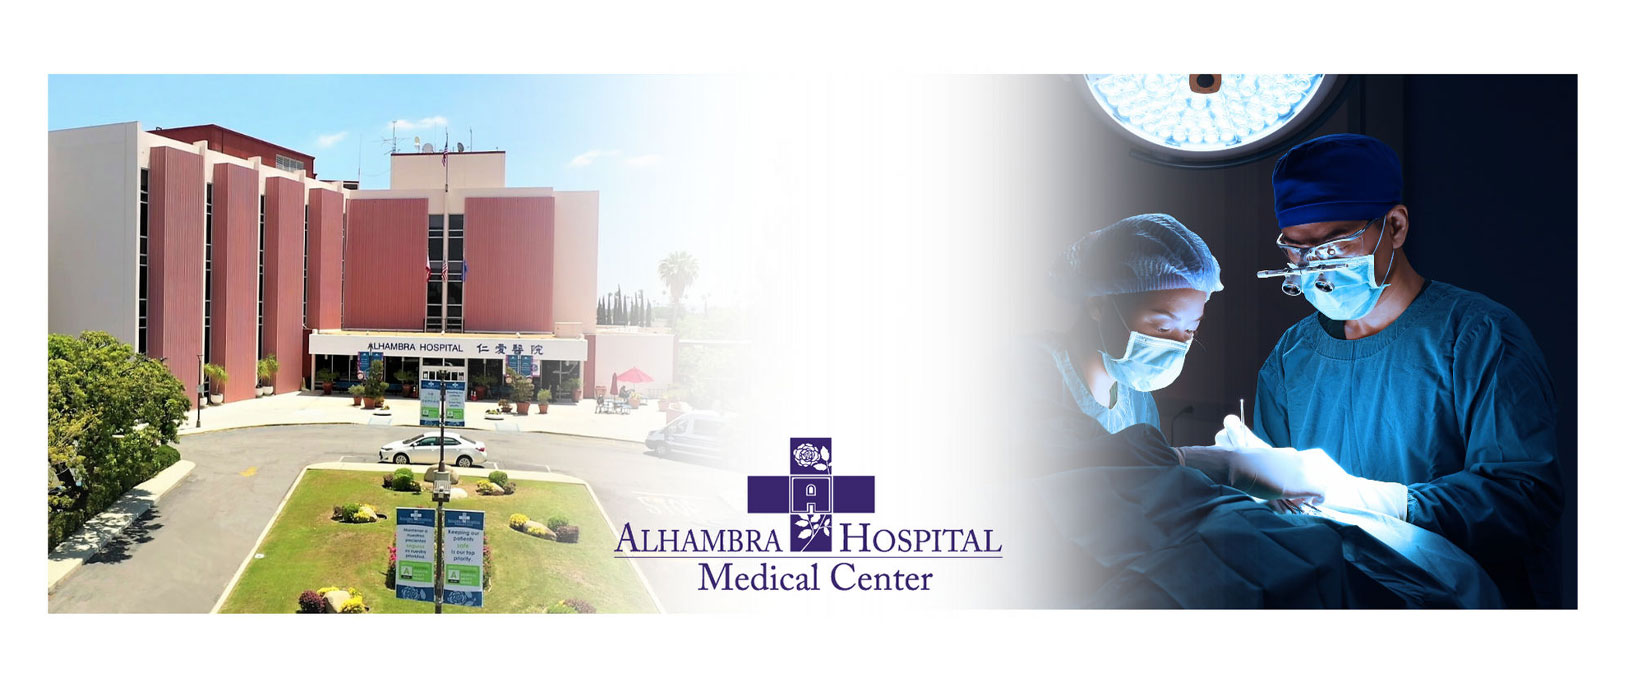 ALHAMBRA HOSPITAL MEDICAL CENTER